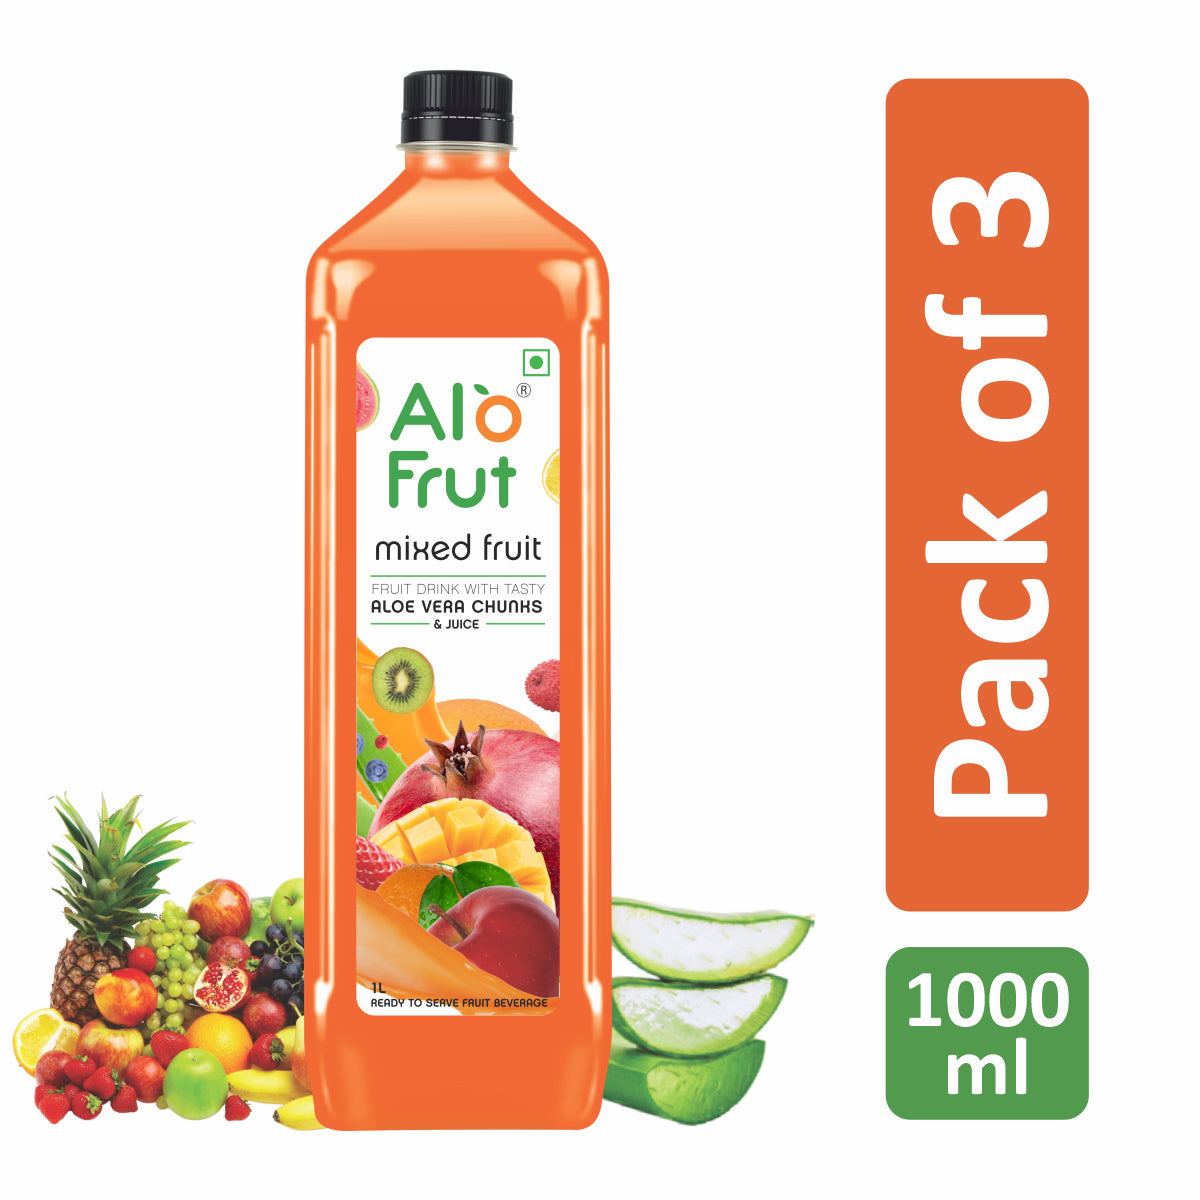 Alo Frut Mixed Fruit Aloevera Chunks & Juice 1 ltr